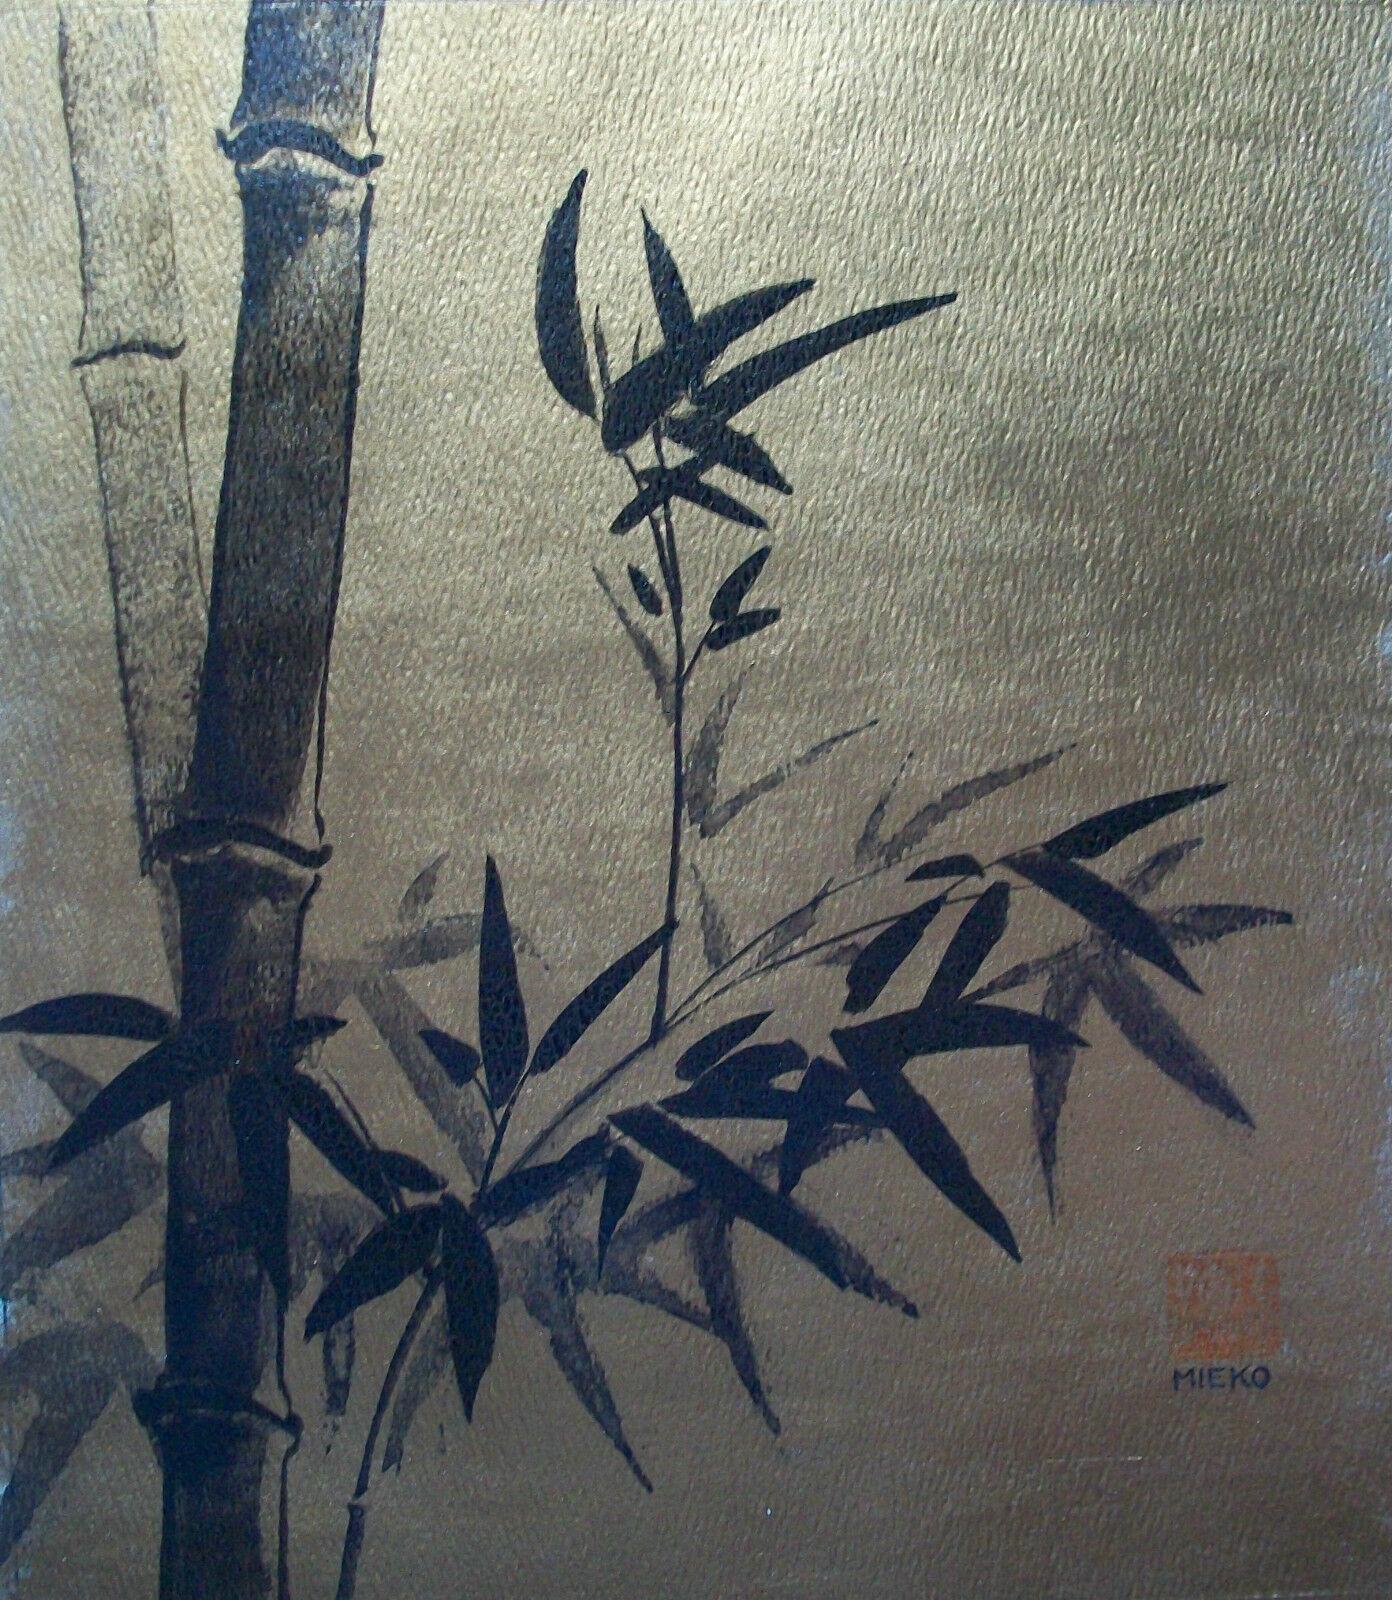 MIEKO - Vintage Asian style painting on watercolor paper - signed with the artist's chop mark and name - Japan - late 20th century.

Hervorragender Vintage-Zustand - auf der Rückseite des Papiers blutet die Goldfarbe auf Ölbasis durch - kein Verlust